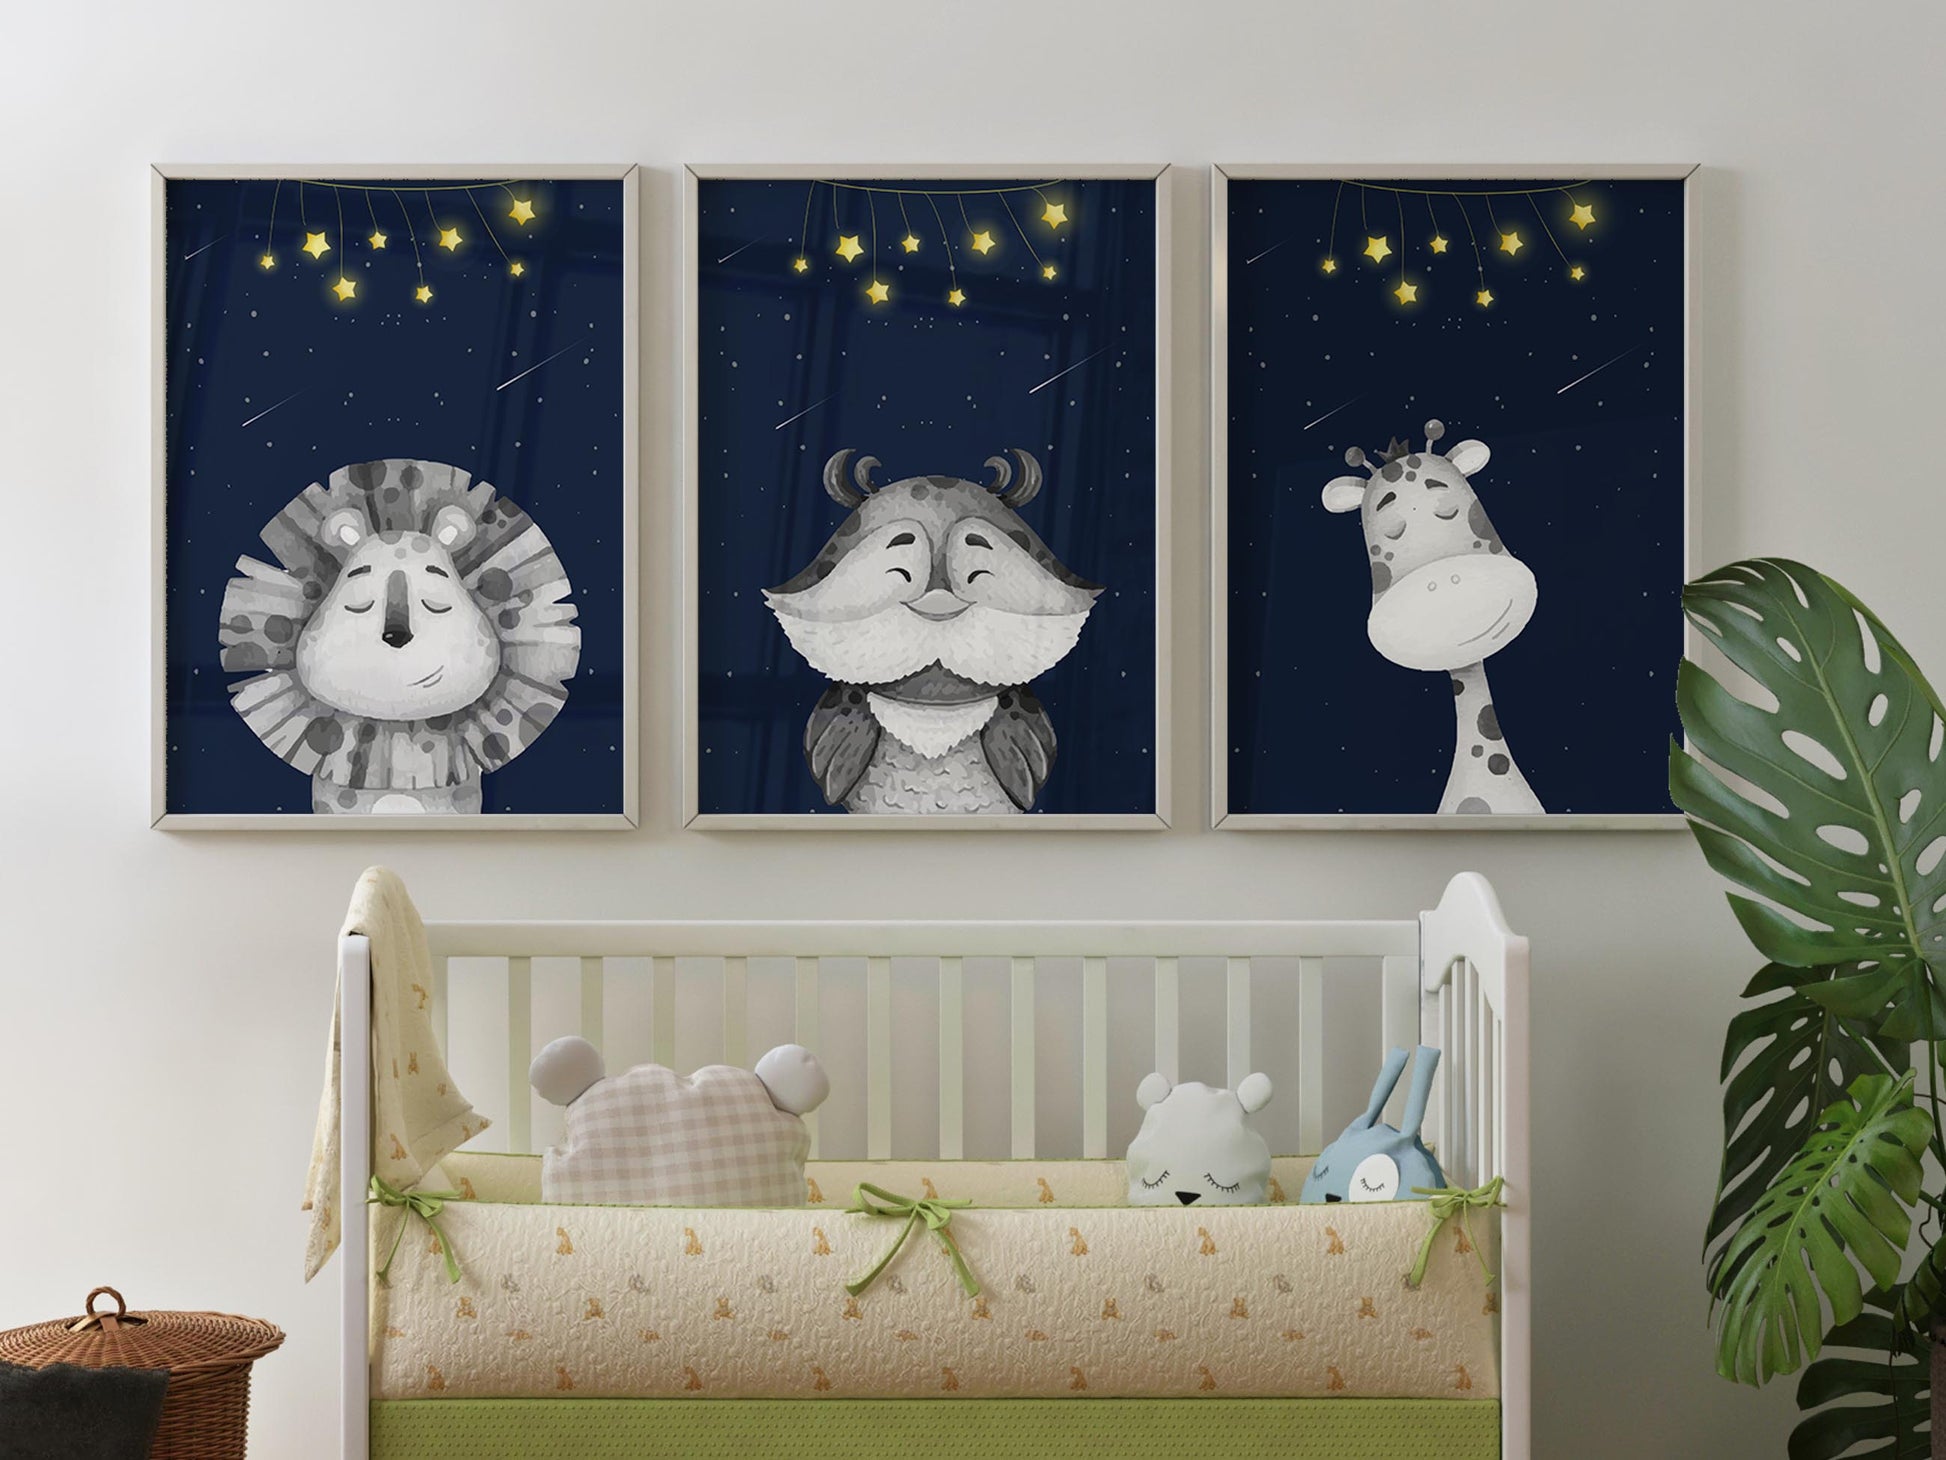 Customized nursery wall art in framed design for baby shower gift.